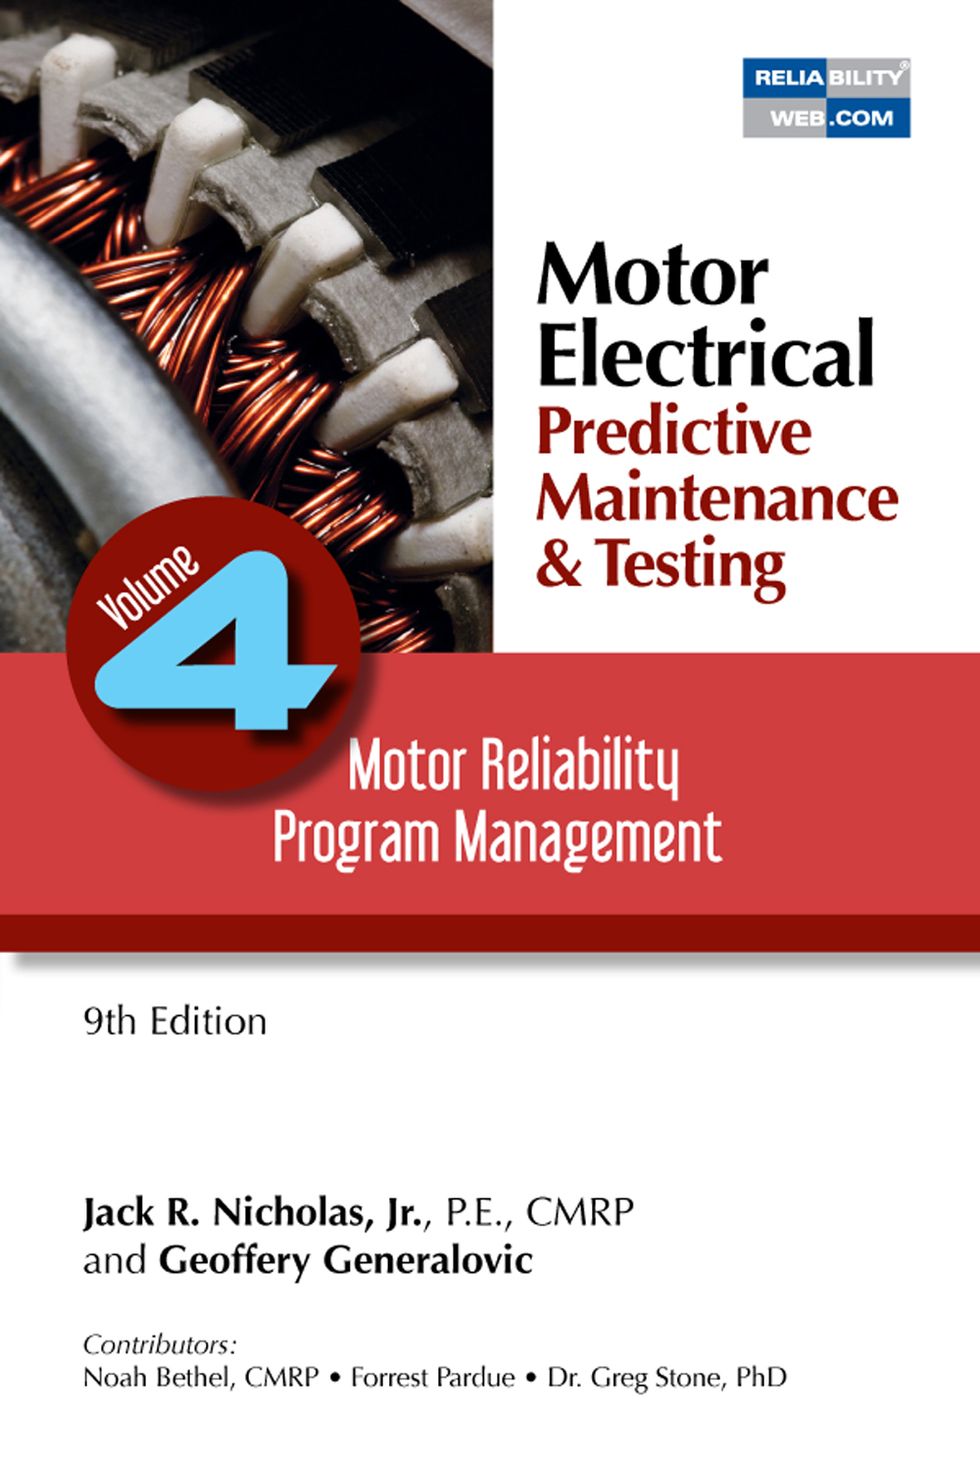  Motor Electrical Predictive Maintenance & Testing Vol. 4 